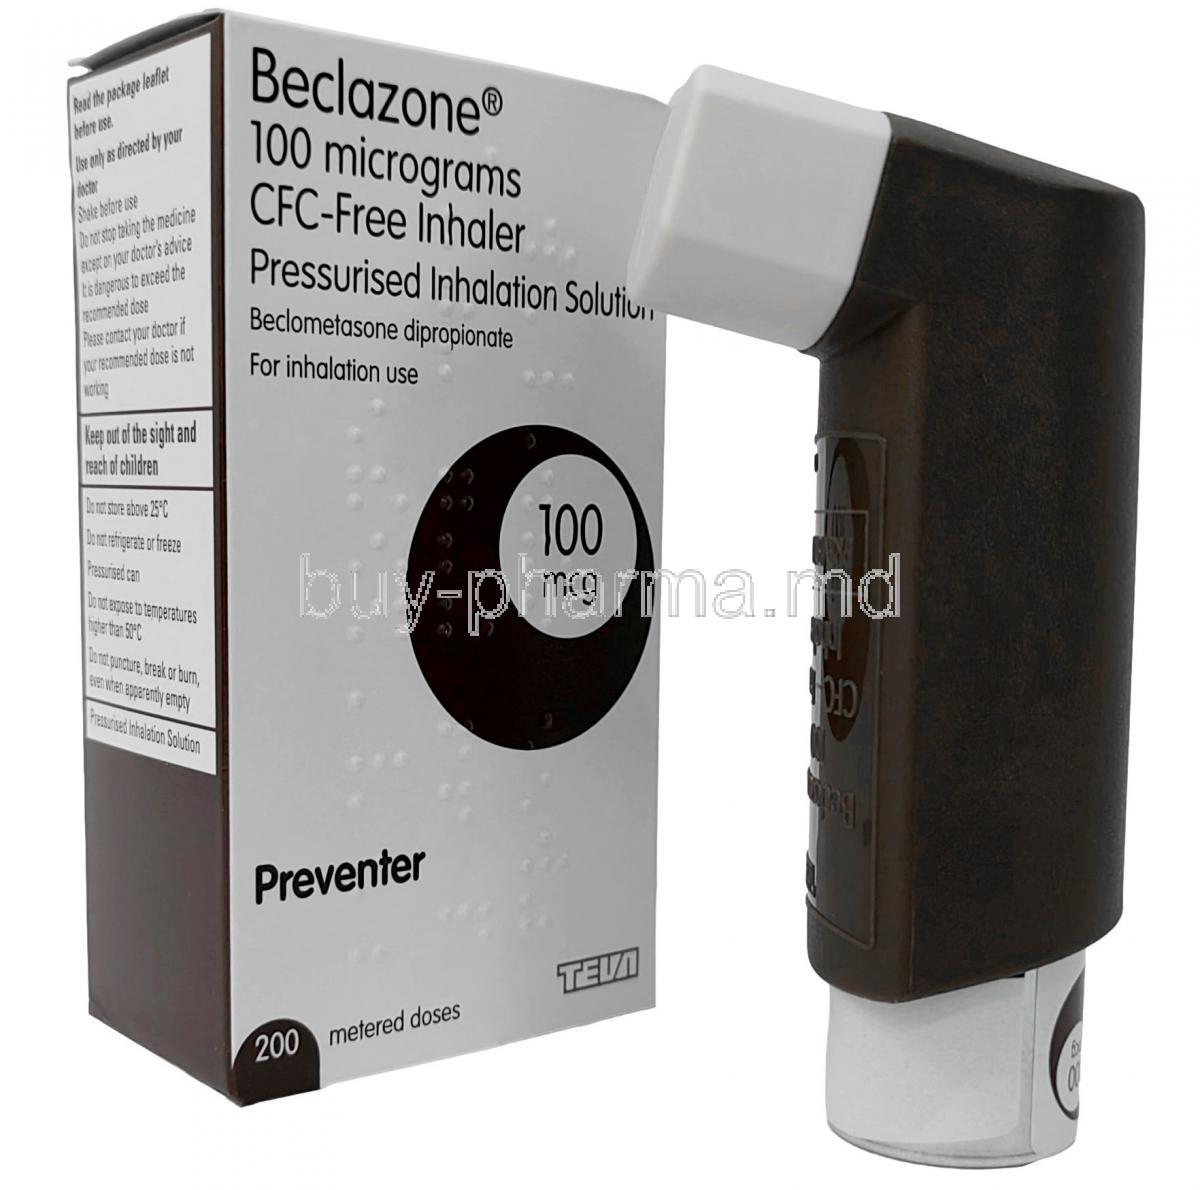 Beclazone Inhaler, Beclomethasone 100 mcg, Inhaler 200 Dose, Takeda Teva, Box, Inhaler